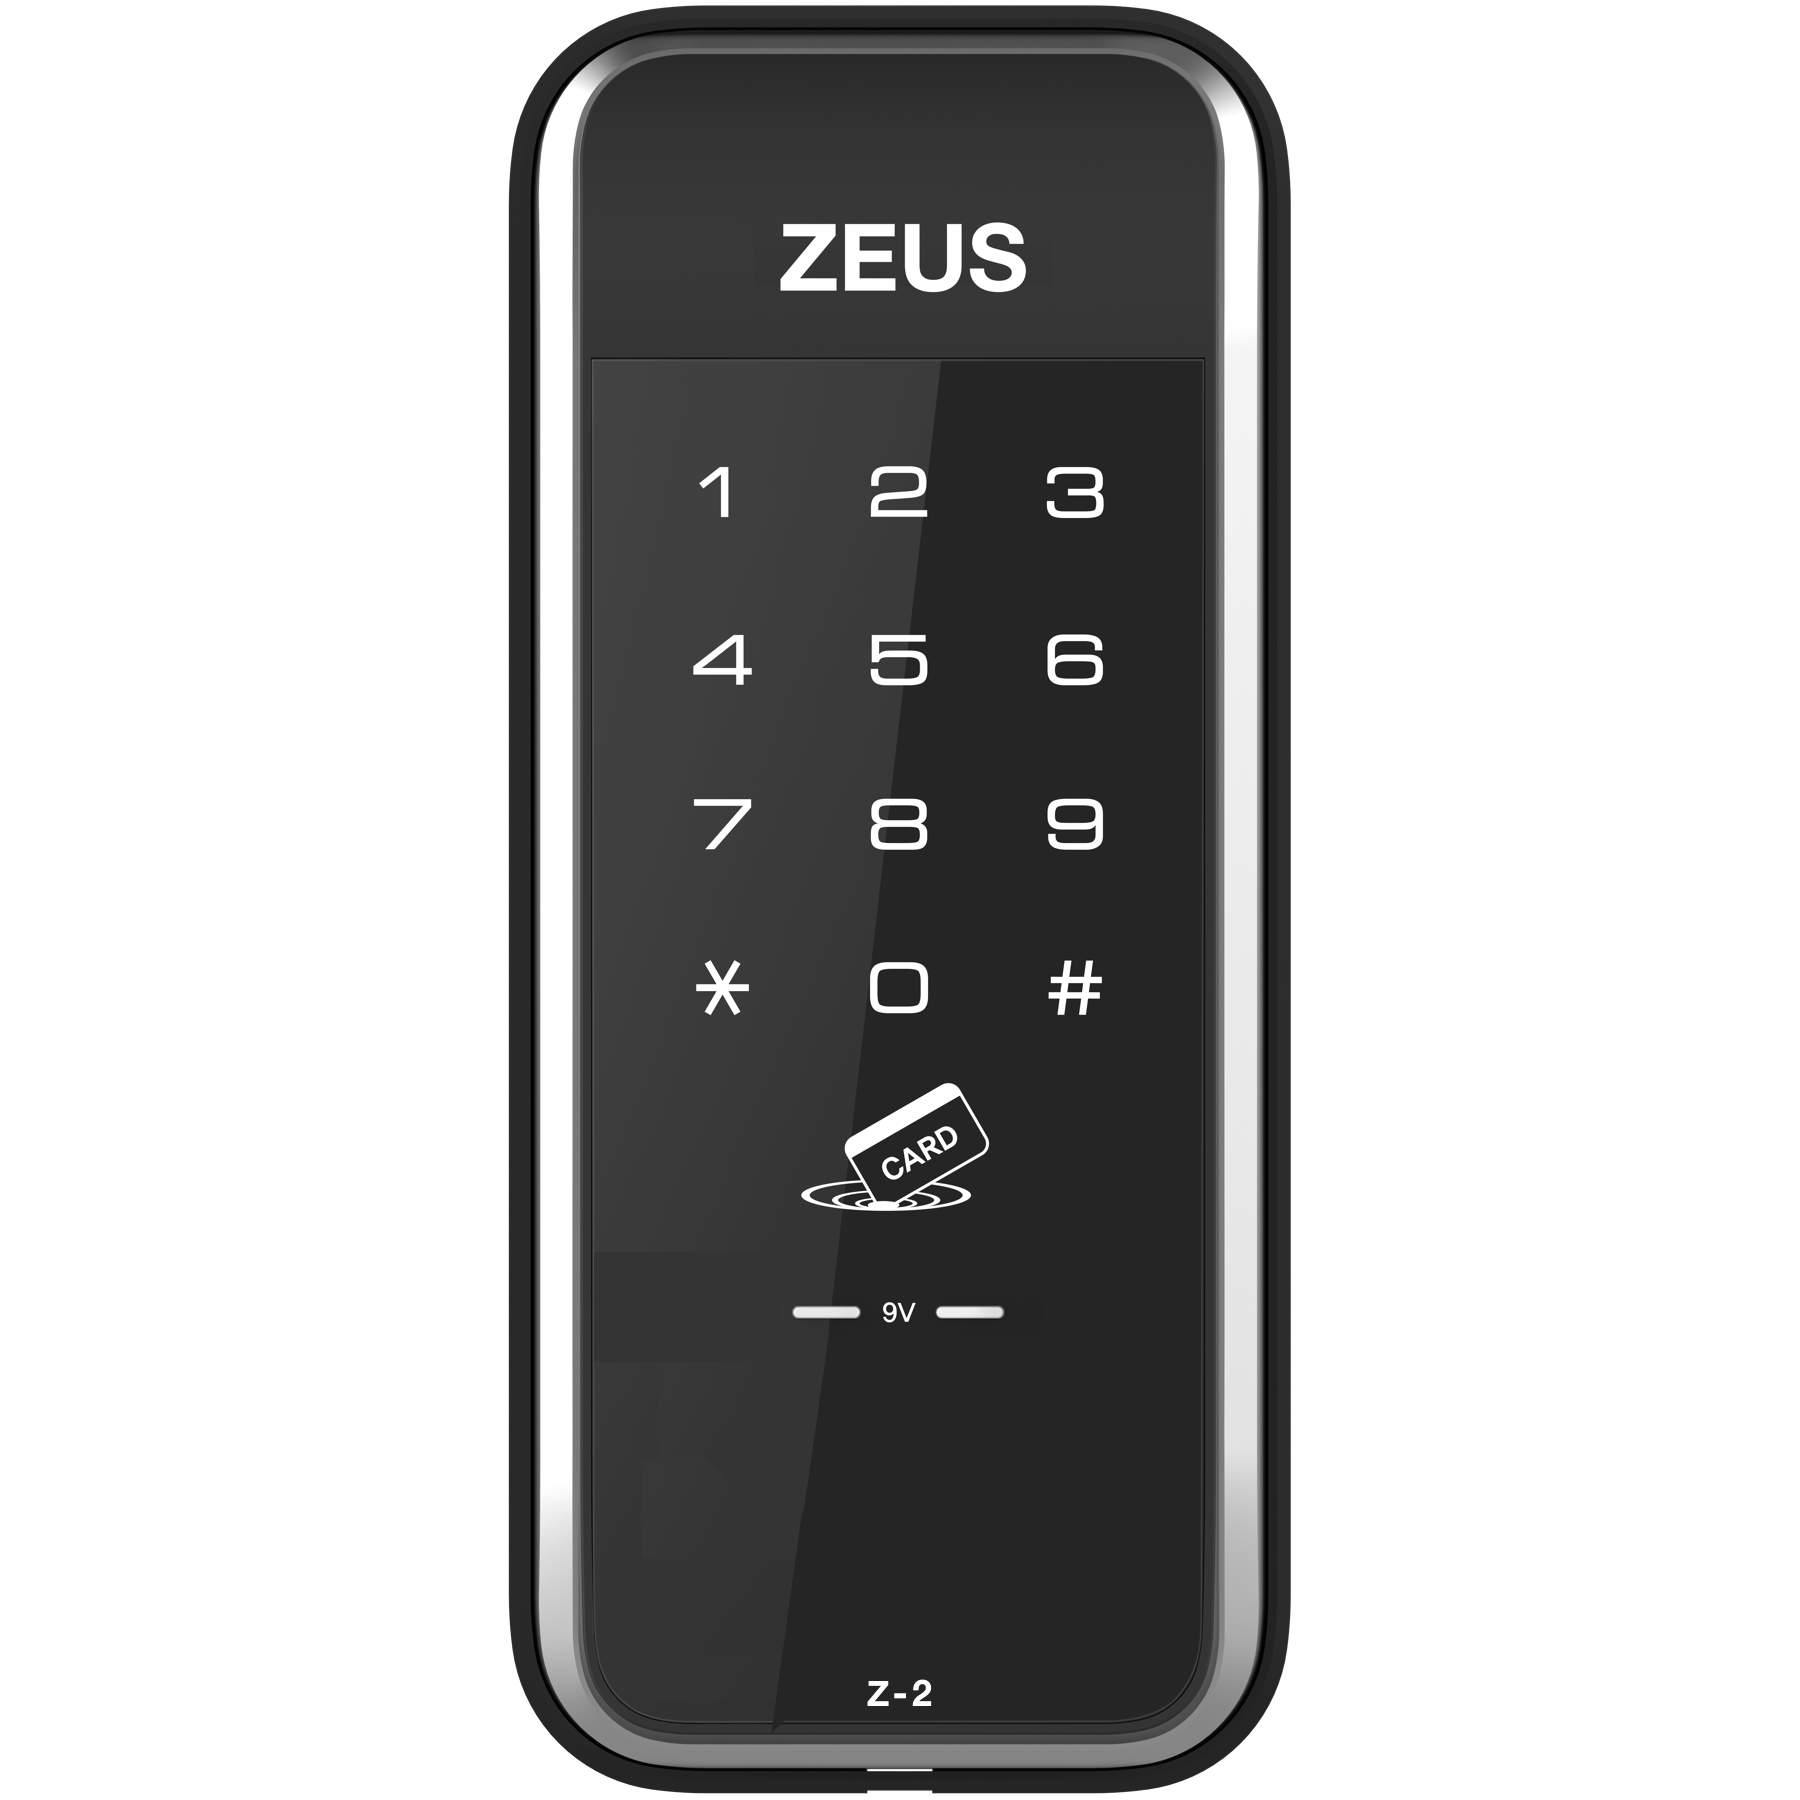 Zeus Z-2 digital lock